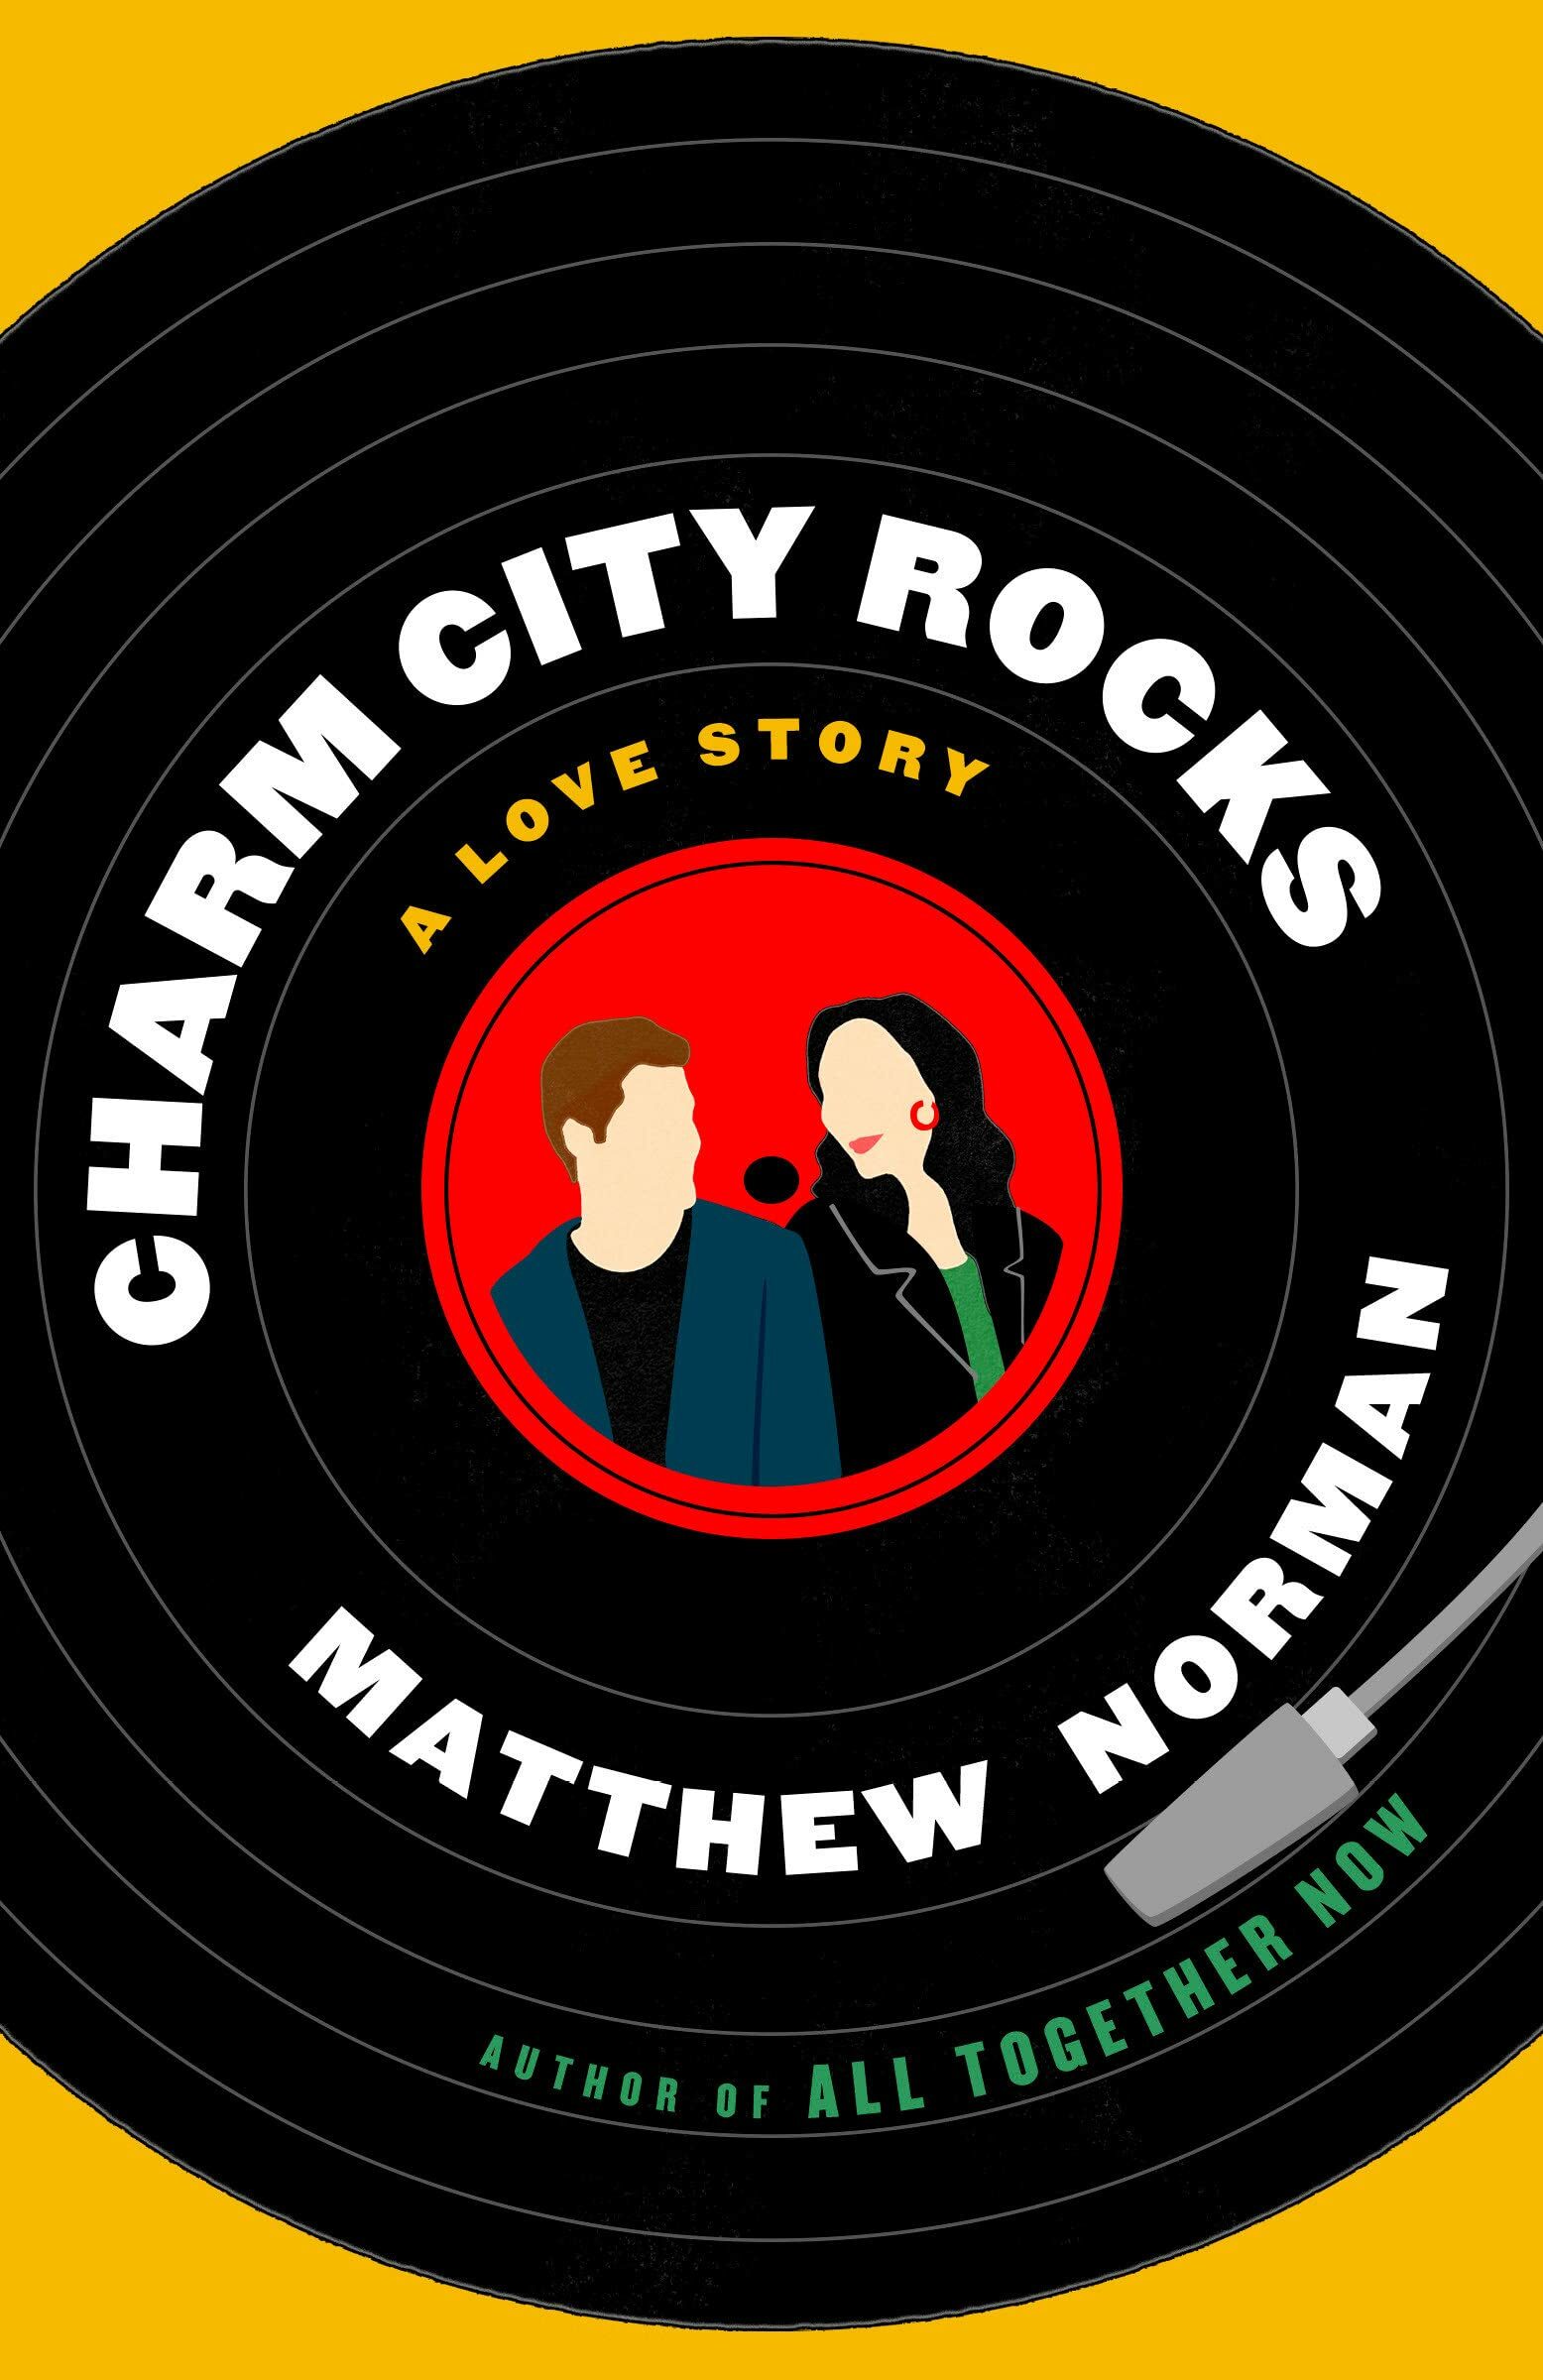 Charm City Rocks: A Love Story